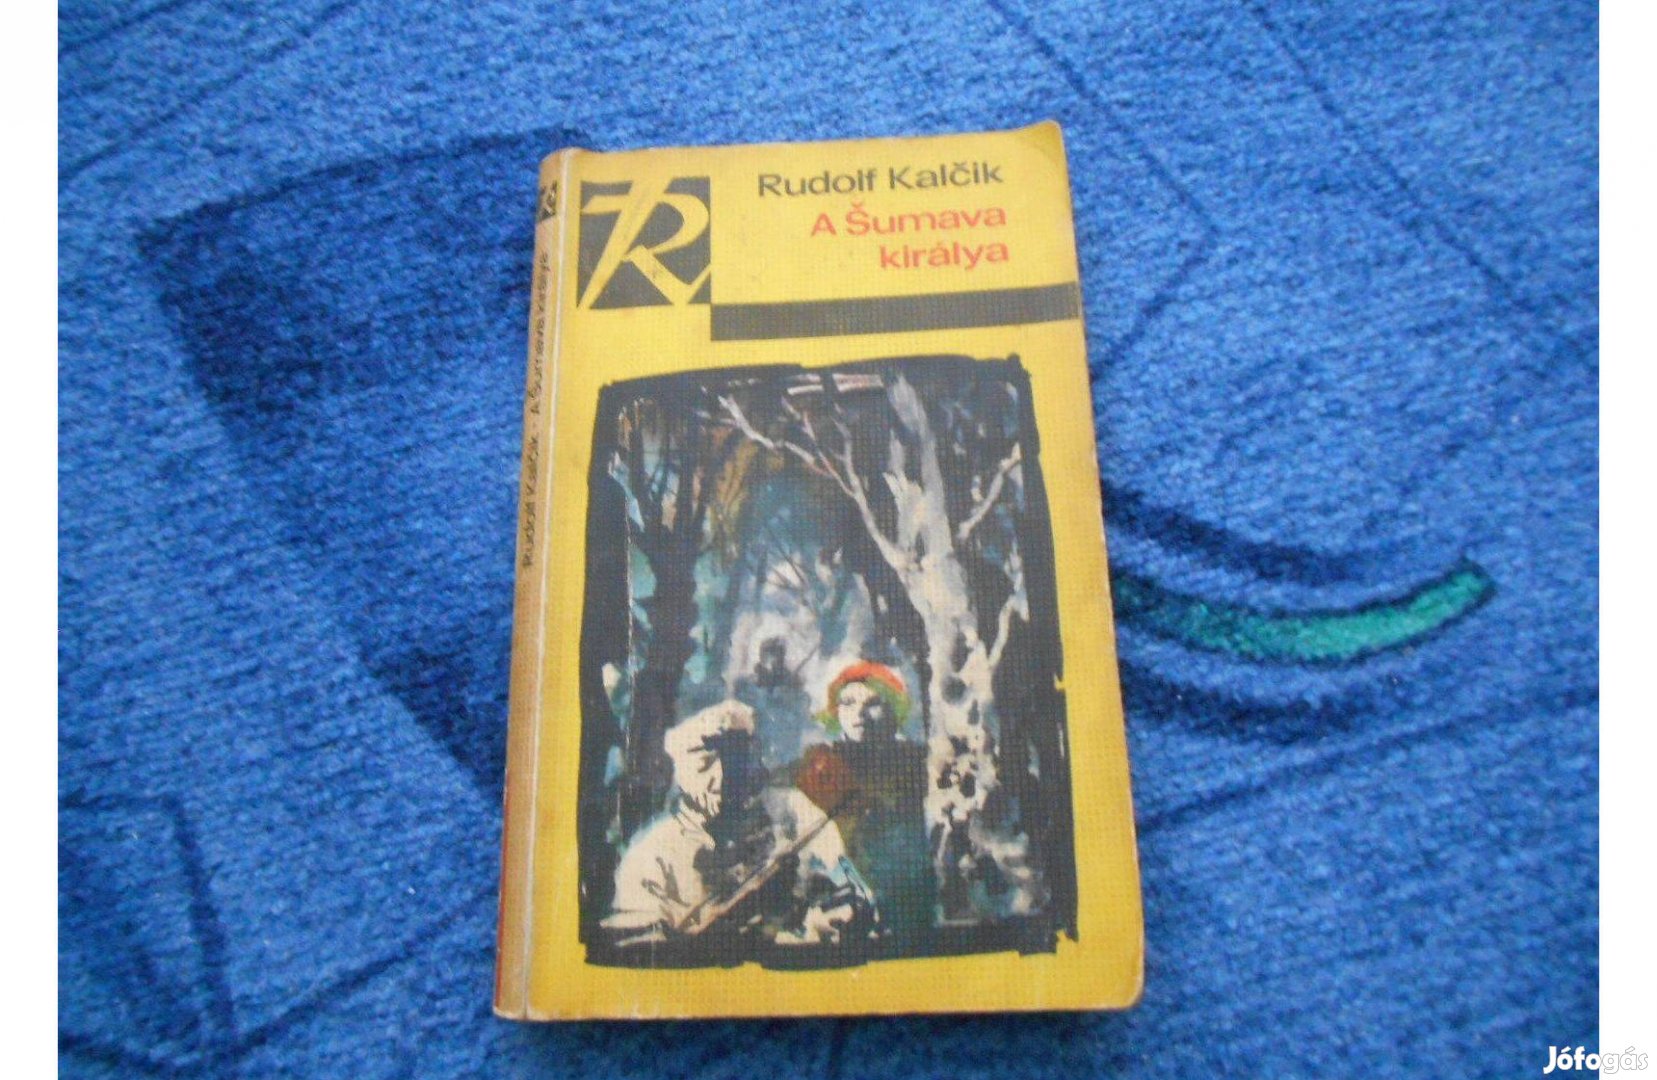 Rudolf Kalčik: A Sumava királya